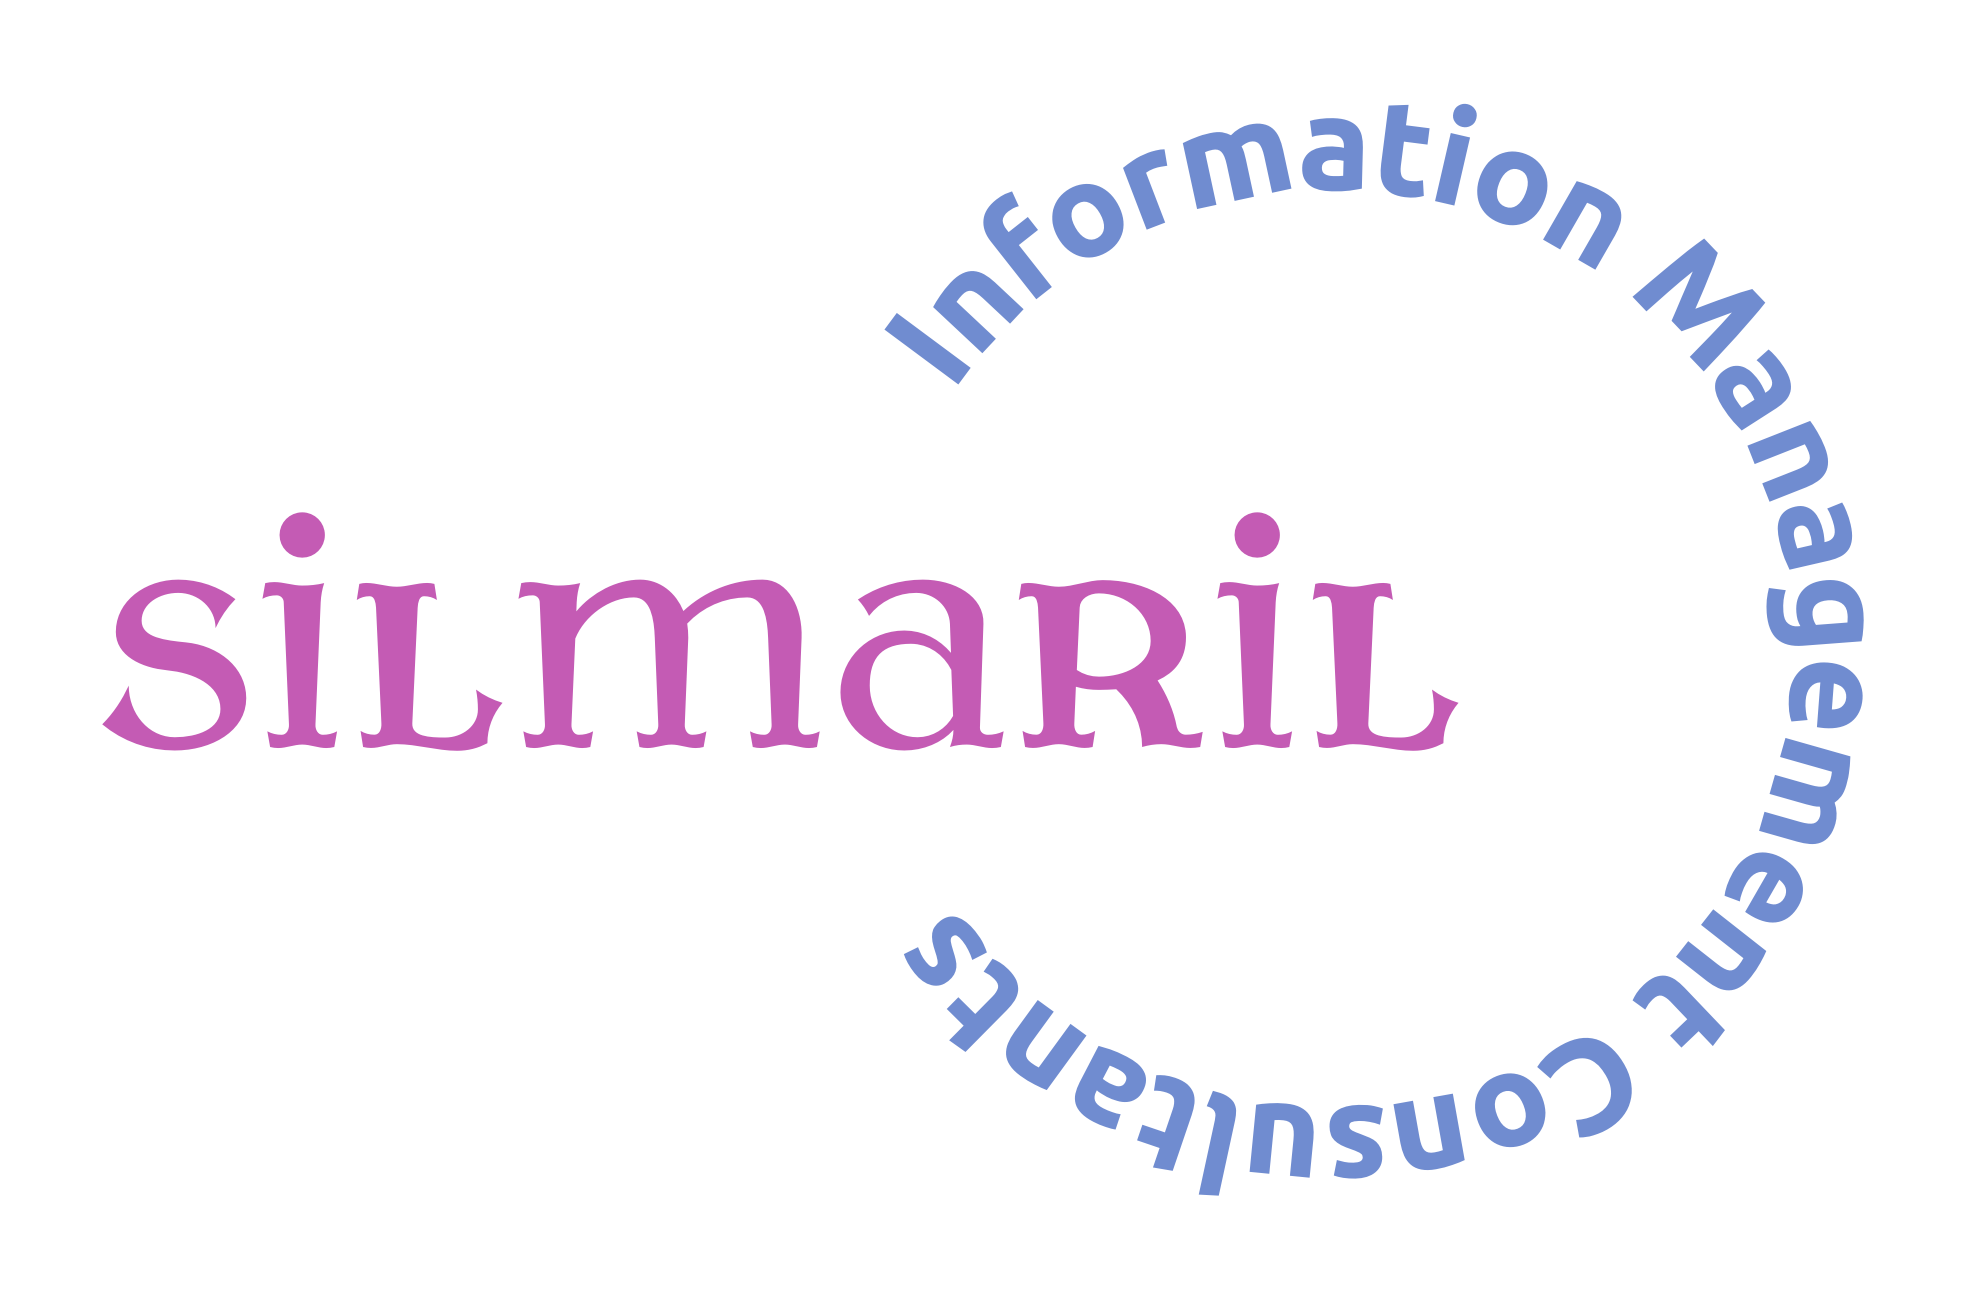 Silmaril logo